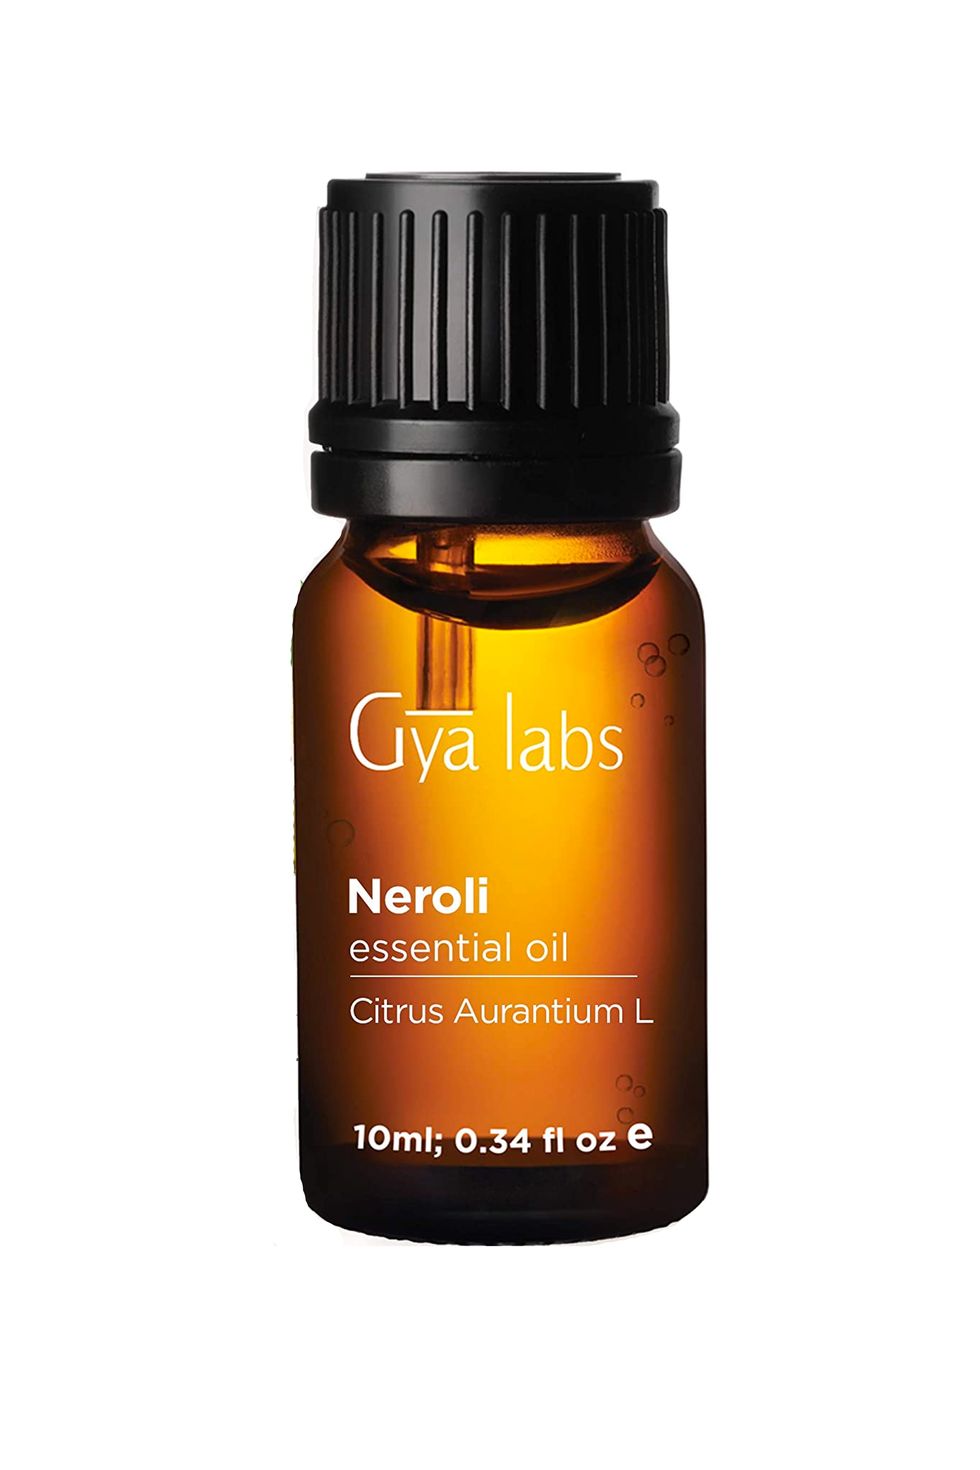 Gya Labs Organic Peppermint Oil for Hair - Mint Essential Oils - Premium  Grade Natural Organic Peppermint Essential Oil for Diffuser & Skin (0.34 fl  Oz) 